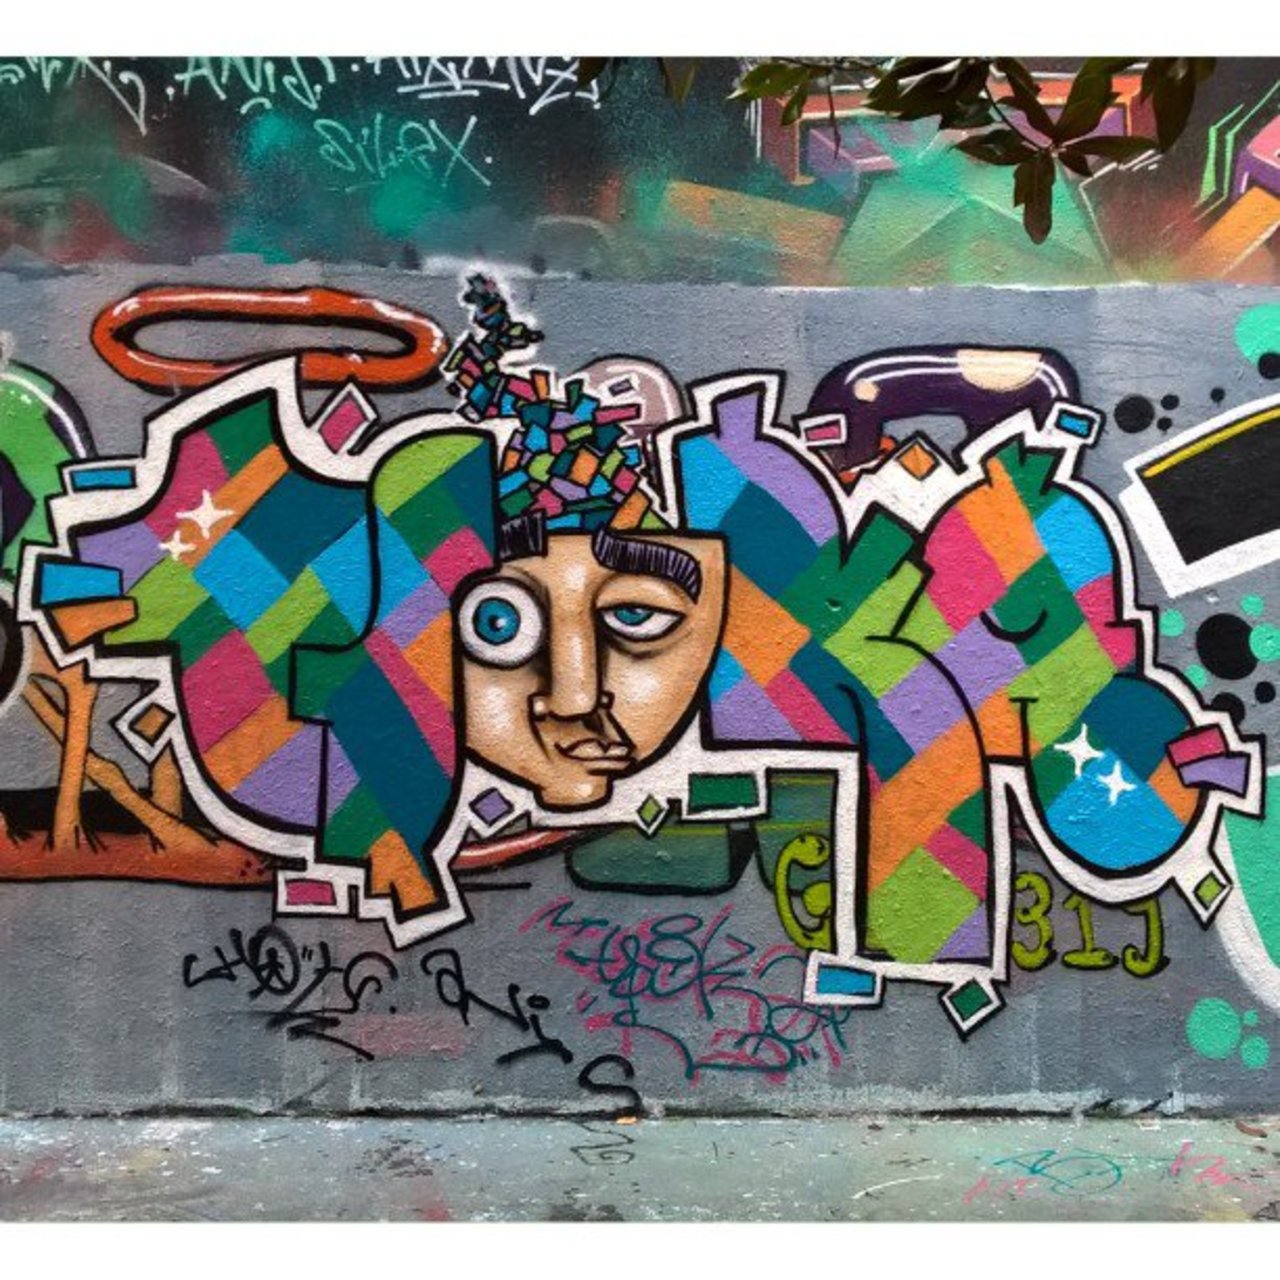 #Paris #graffiti photo by @maxdimontemarciano http://ift.tt/1GFt20k #StreetArt https://t.co/5vNJ3wqONV